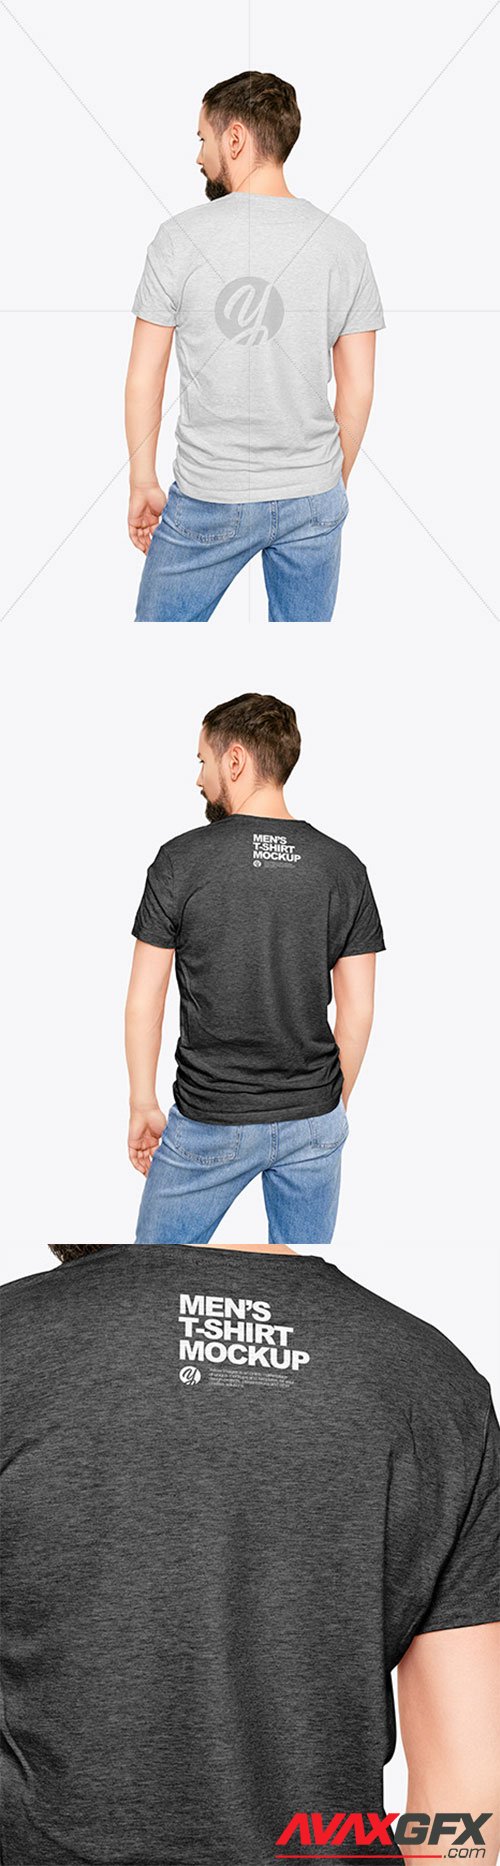 Man in a T-Shirt Mockup 60145